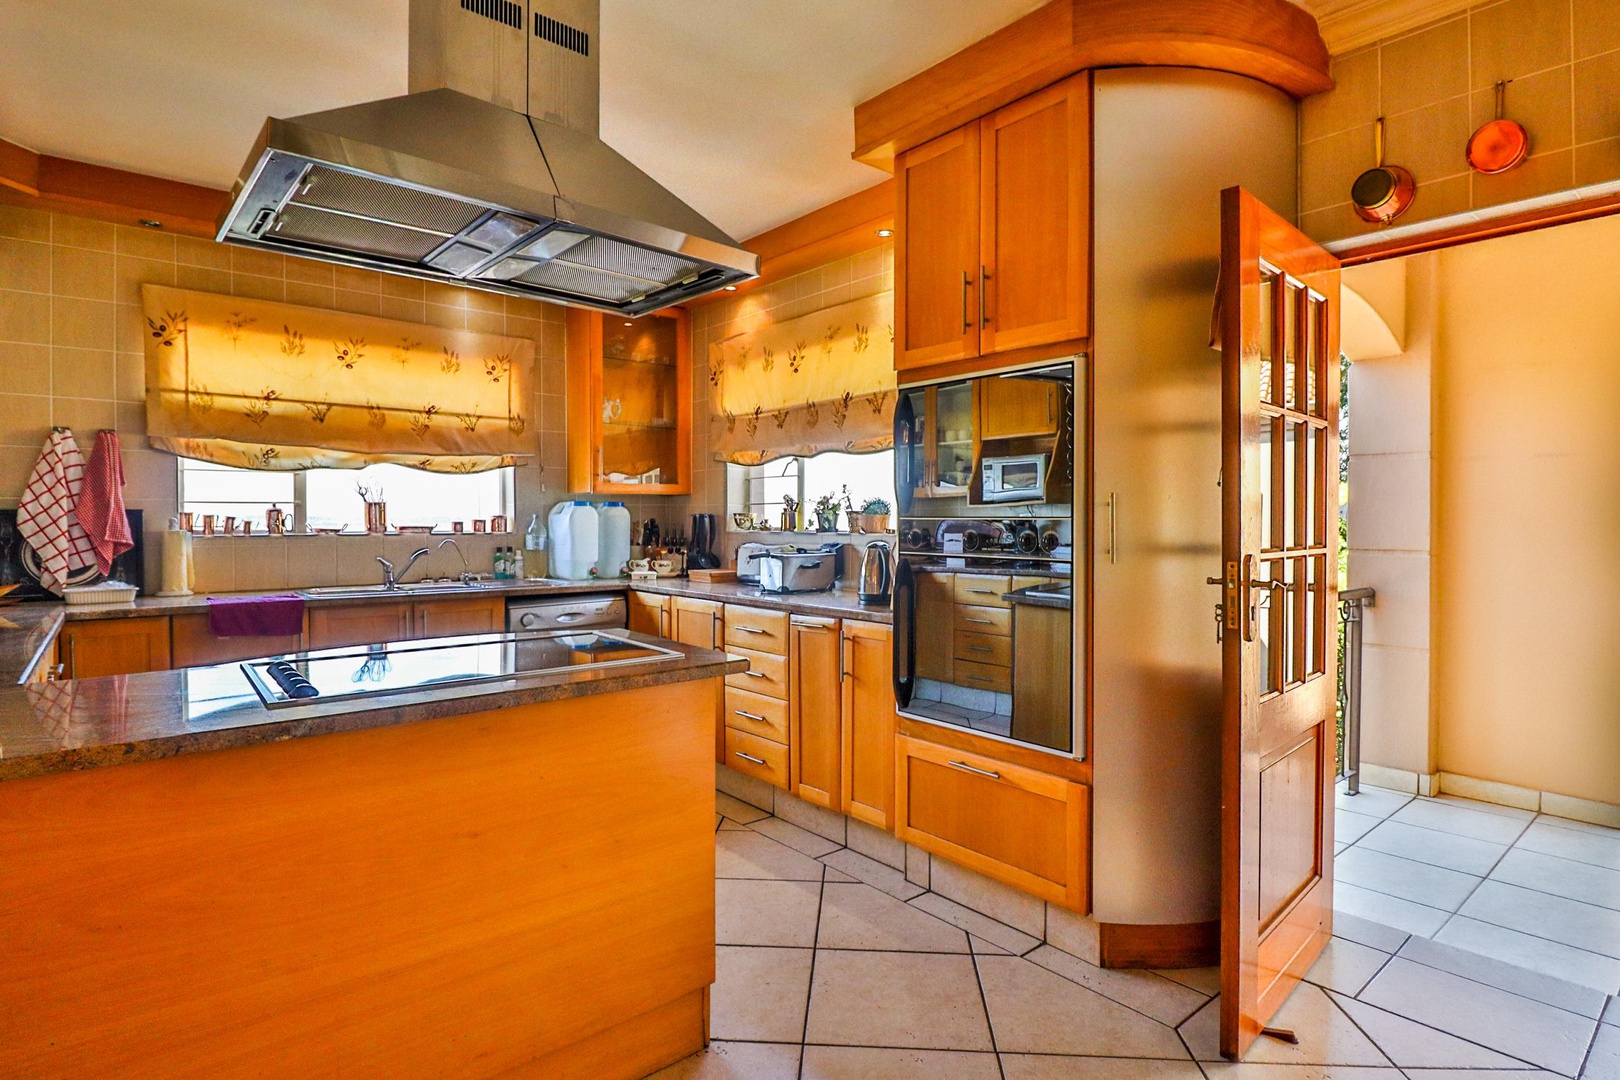 House in Kosmos - Beautifully finished kitchen